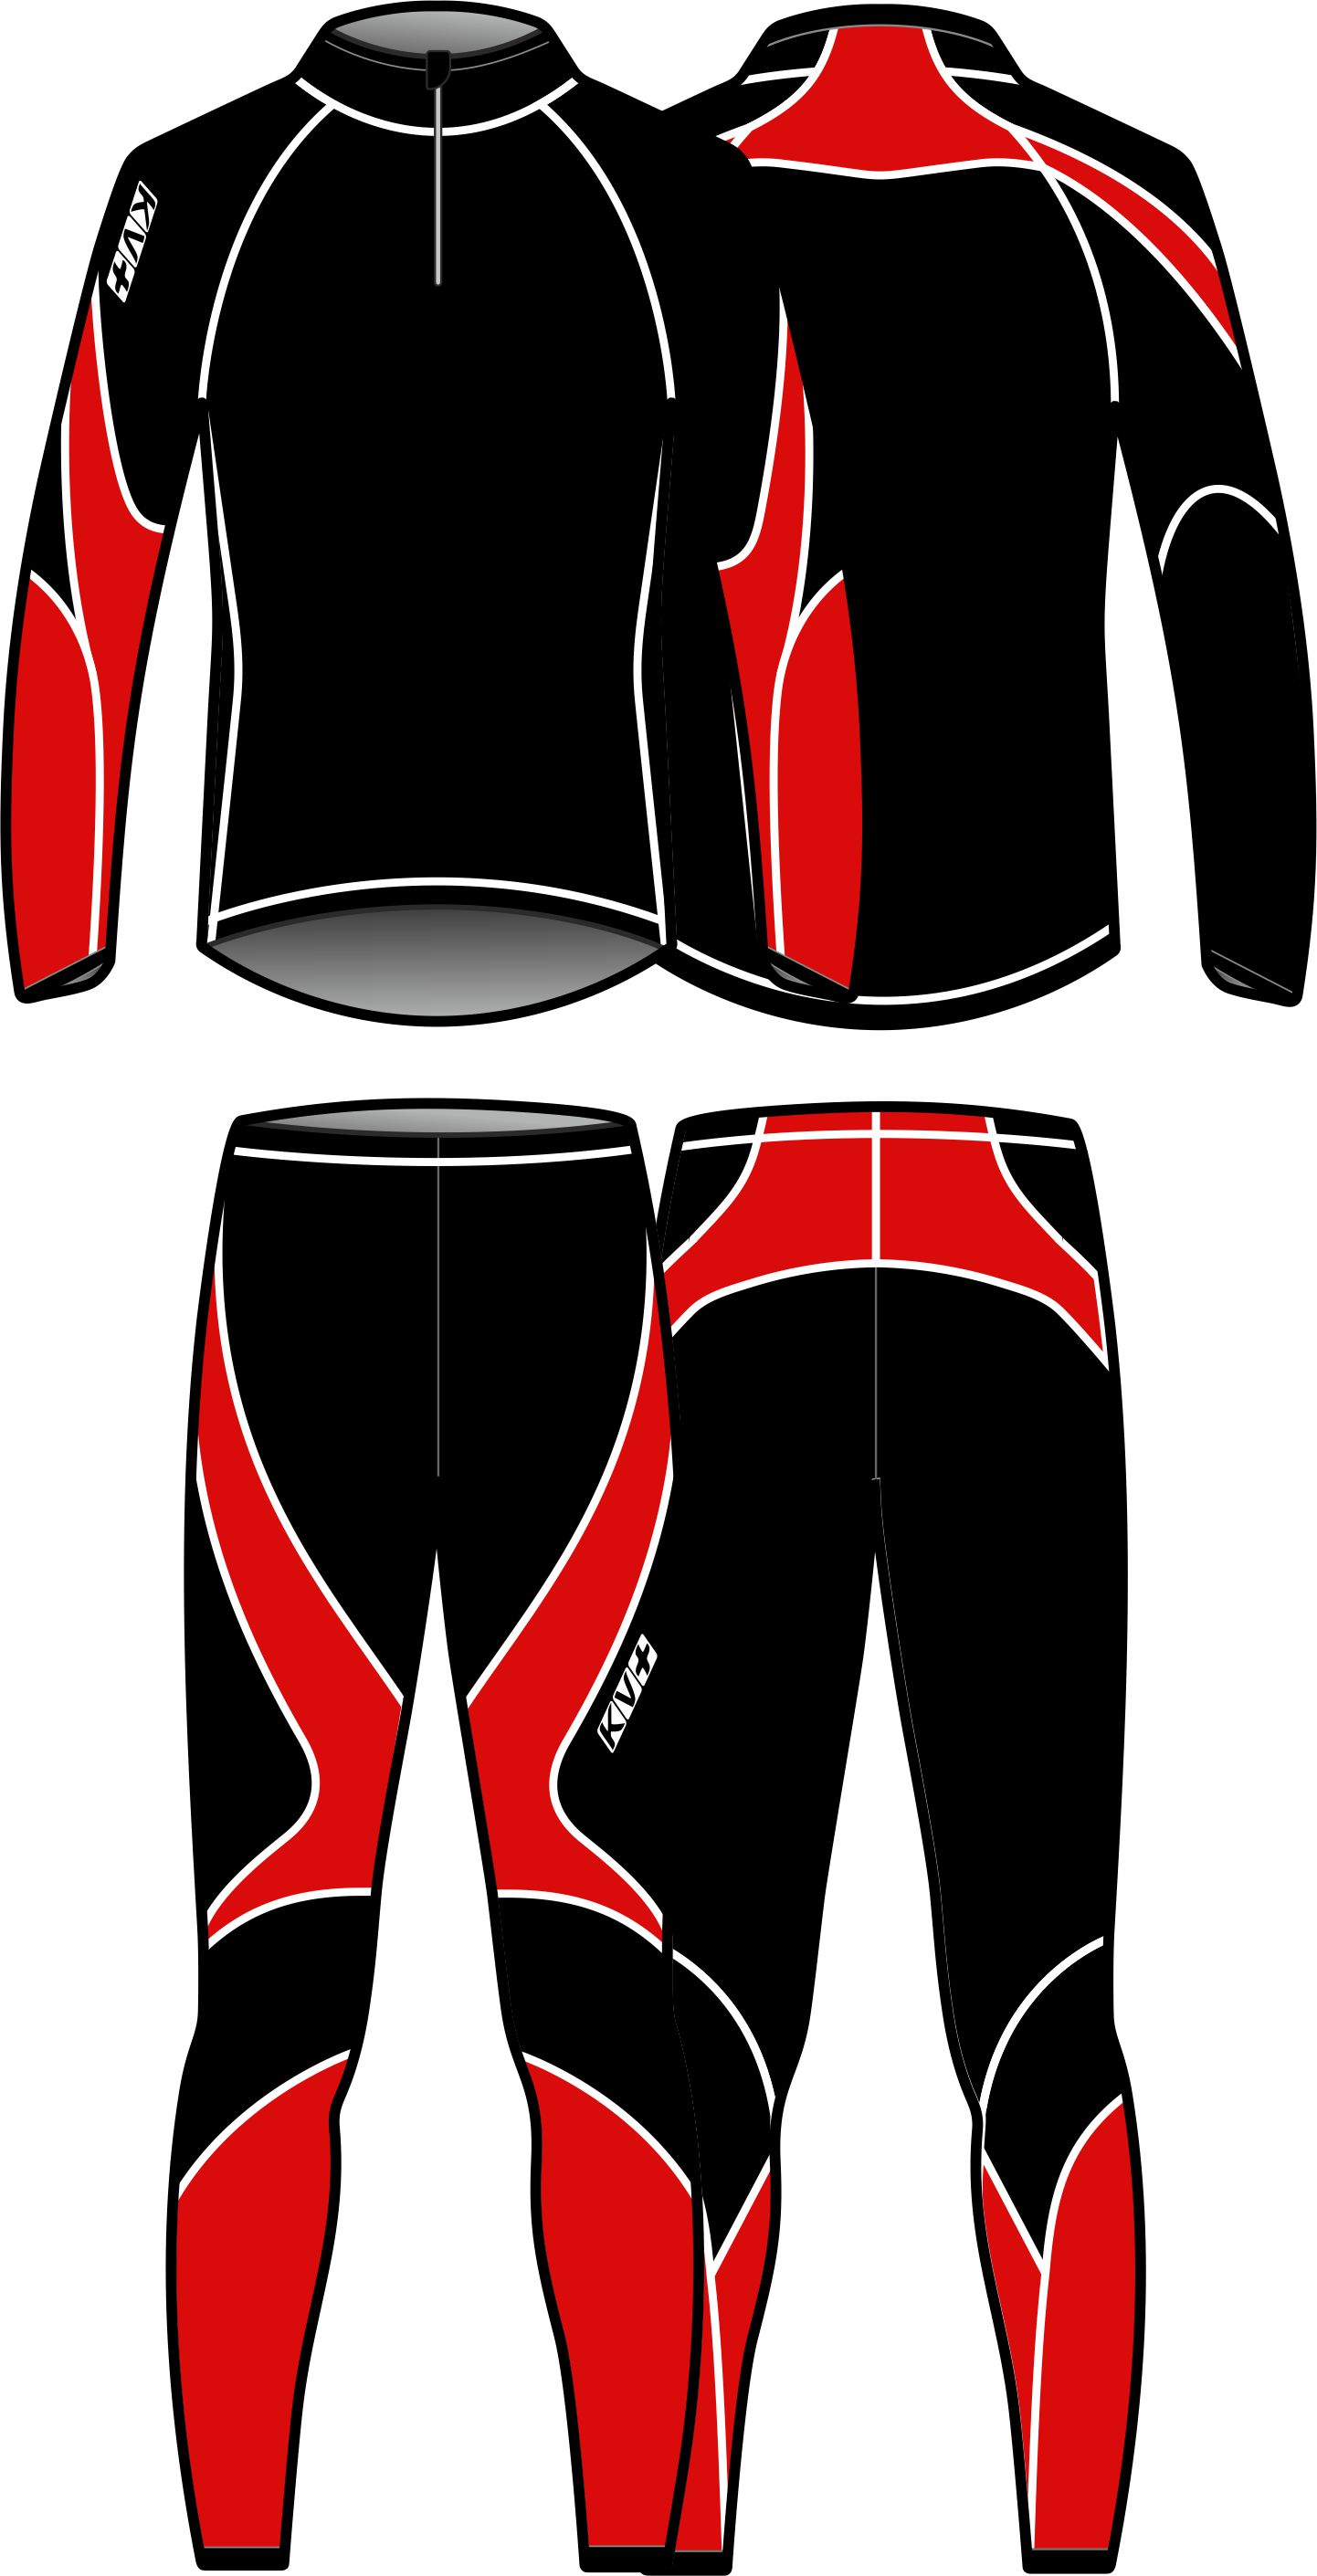 LAHTI TWO PIECES SUIT UNISEX (black/red)